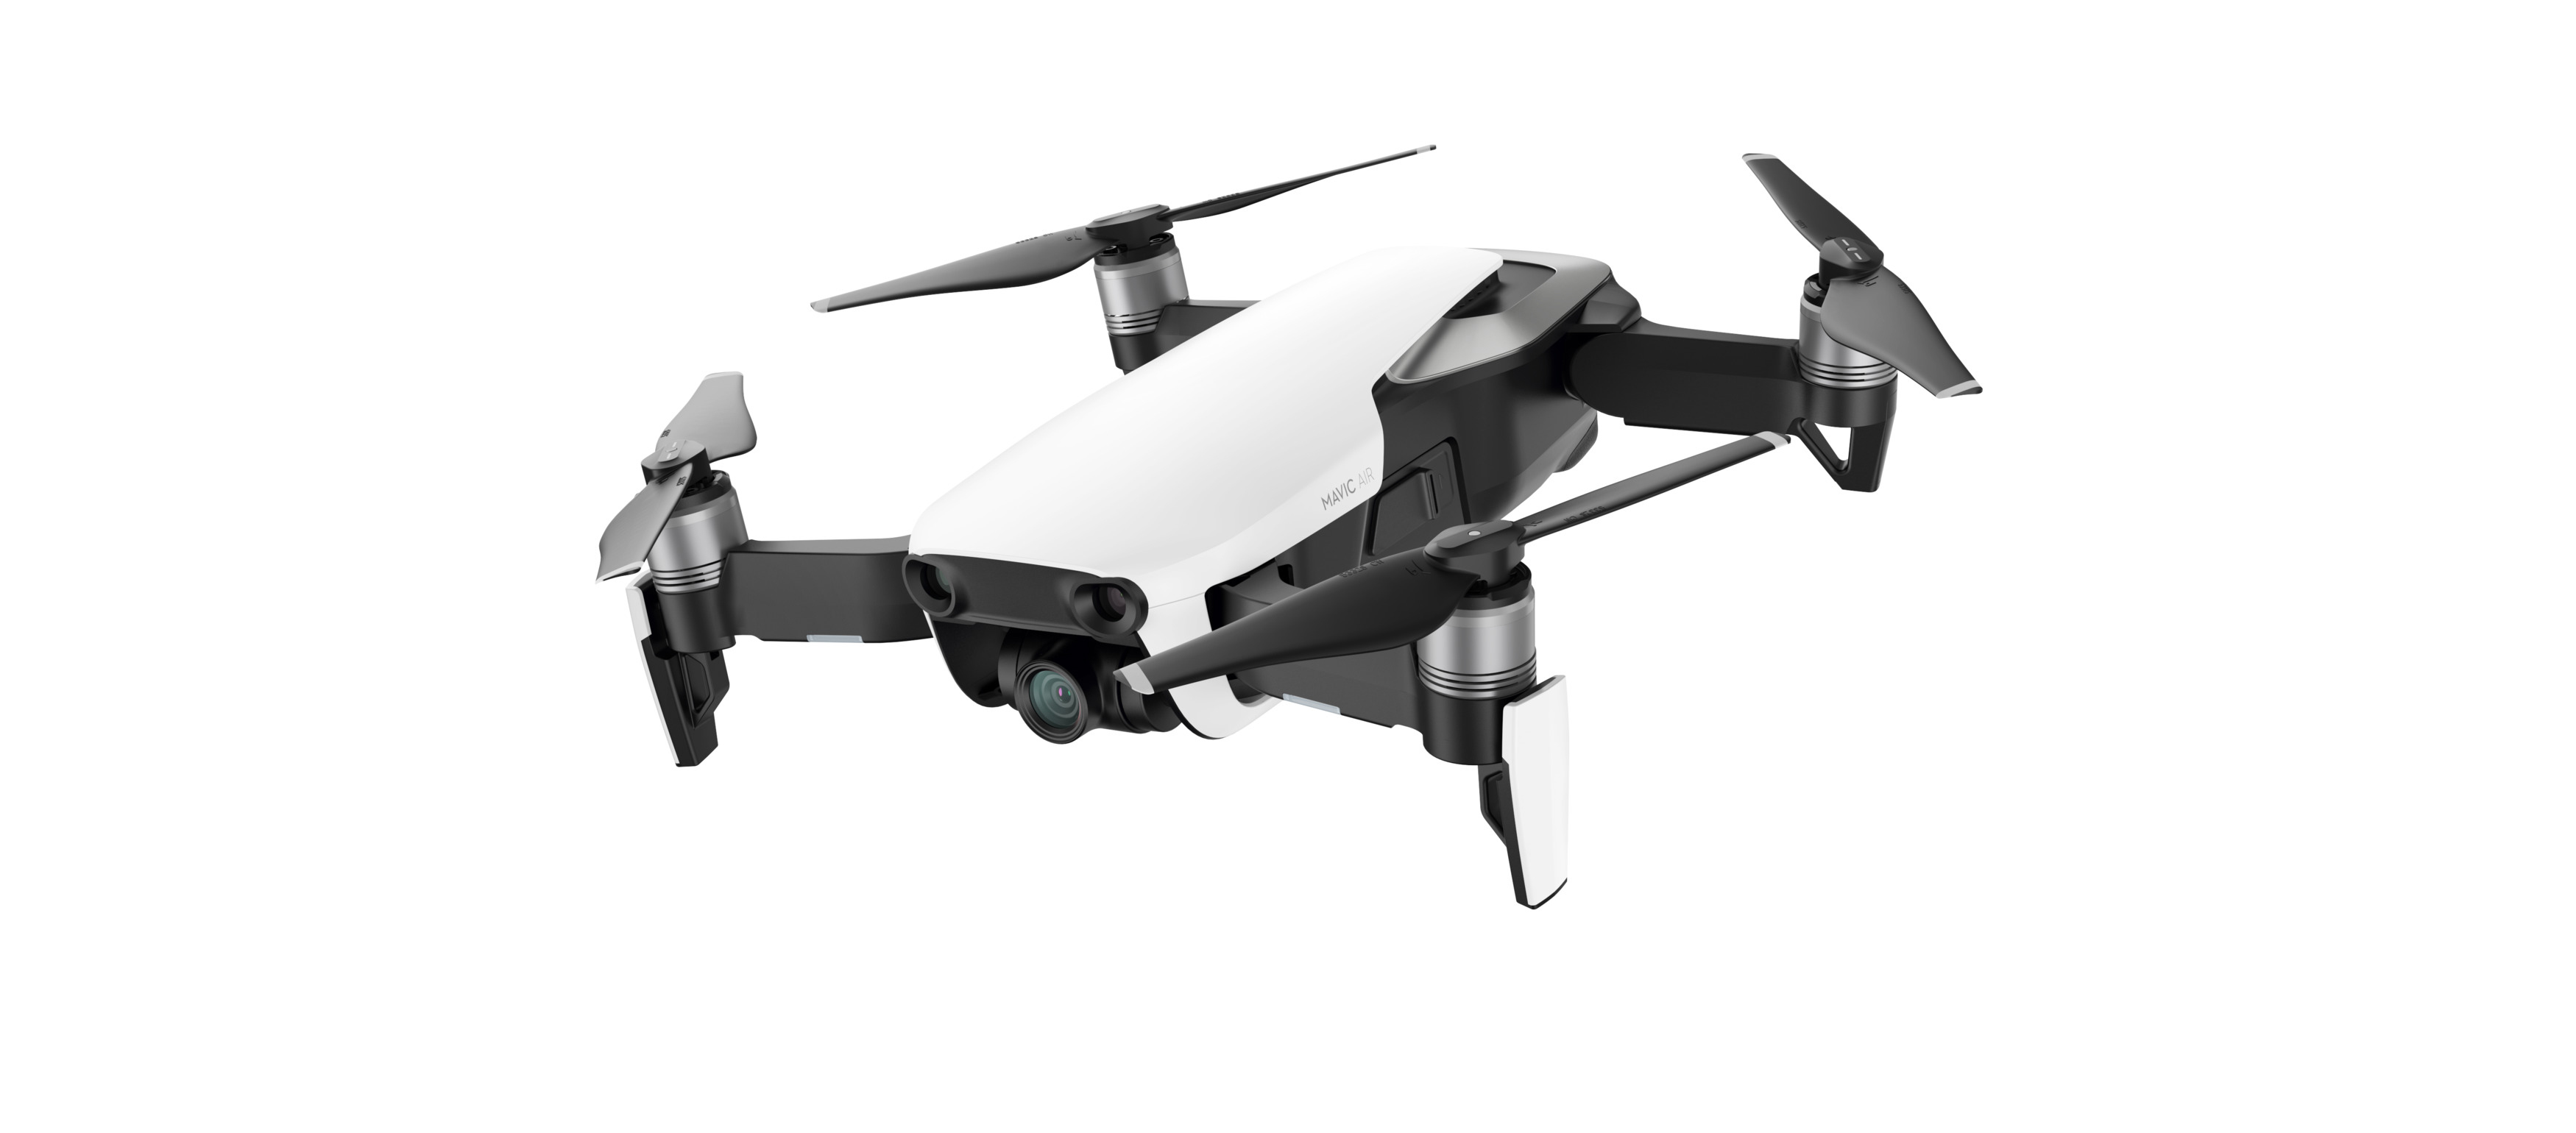 Mavic Drohne, Air DJI Arctic White